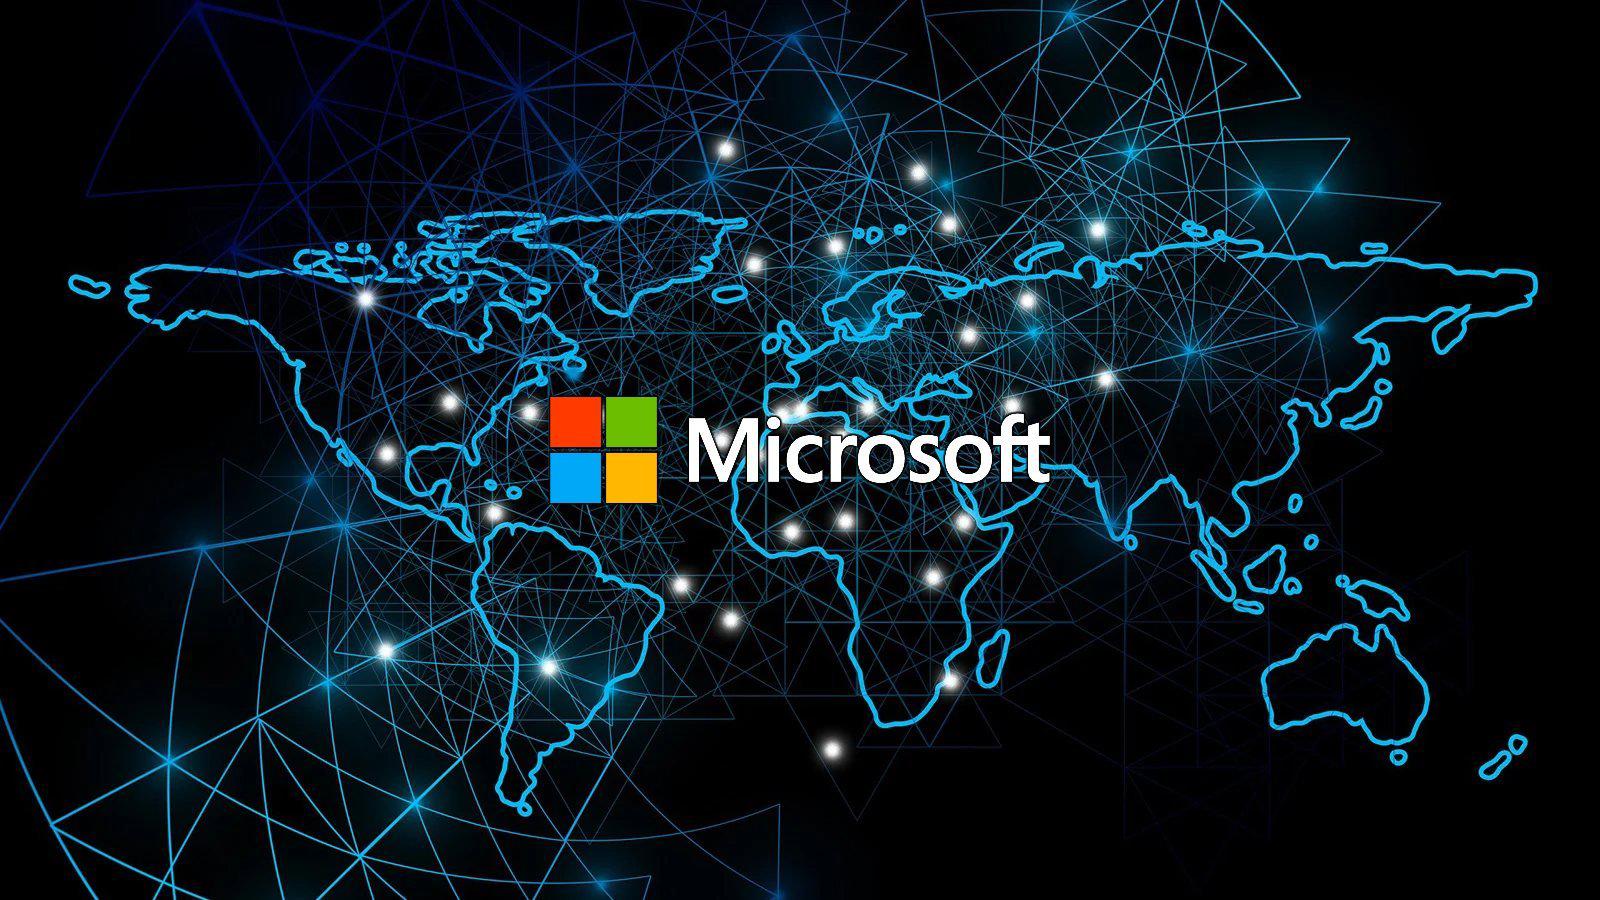 Microsoft announces enterprise DDoS protection for SMBs